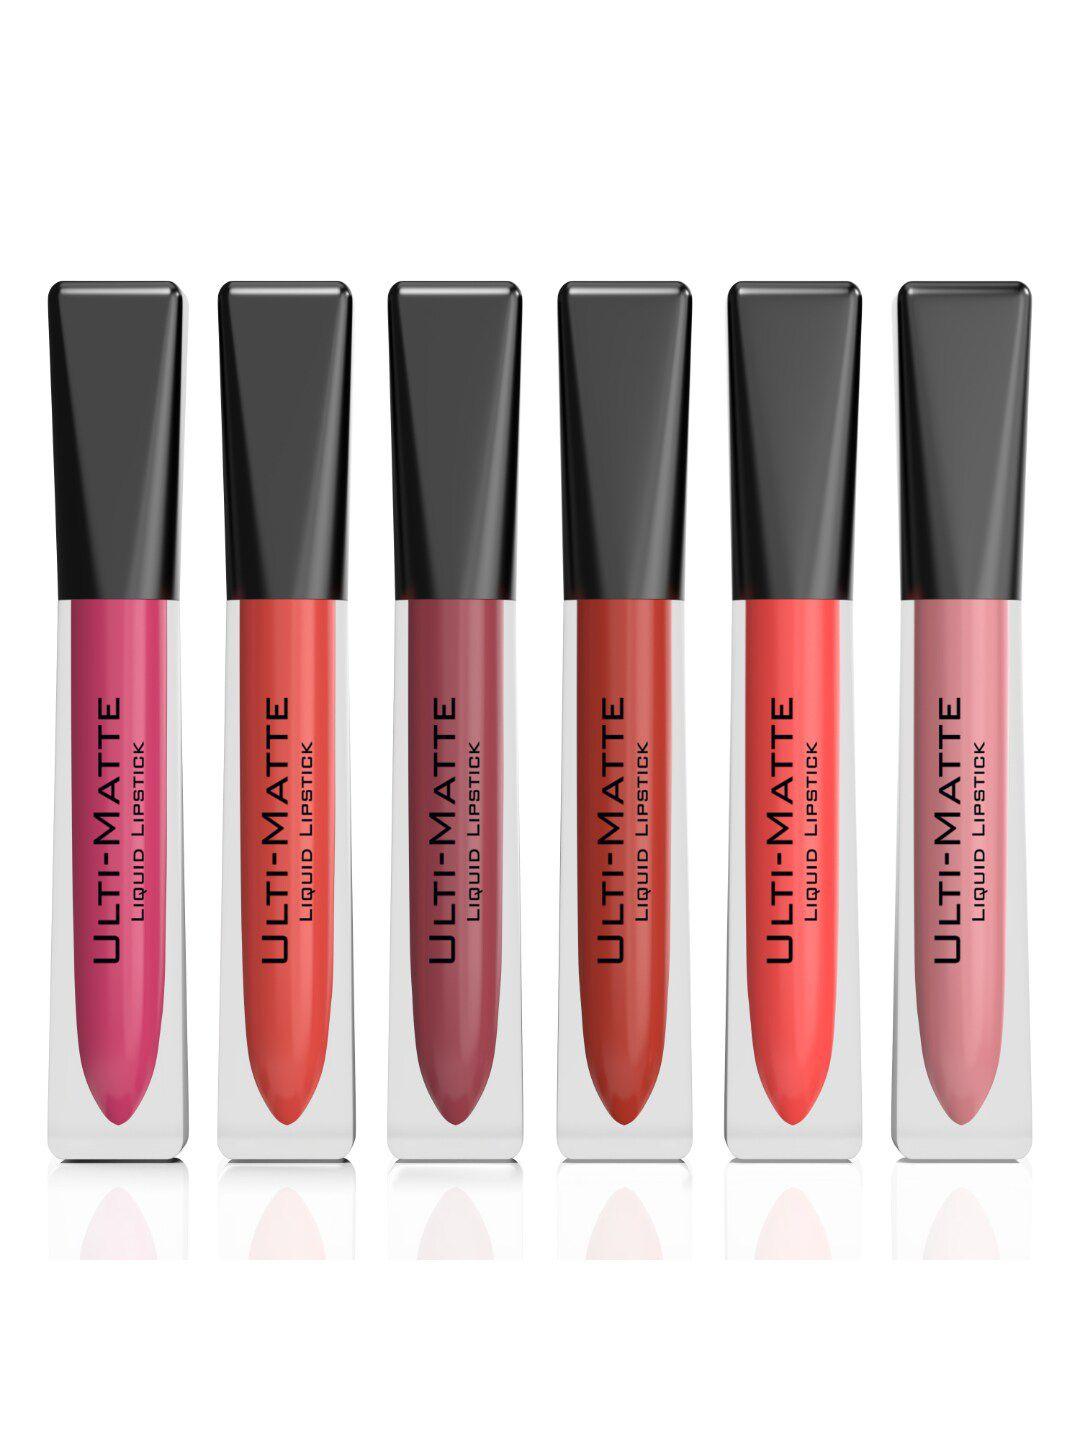 bella voste set of 6 ulti-matte liquid lipsticks 3.7ml each - shade 05, 06, 11, 12, 17, 18